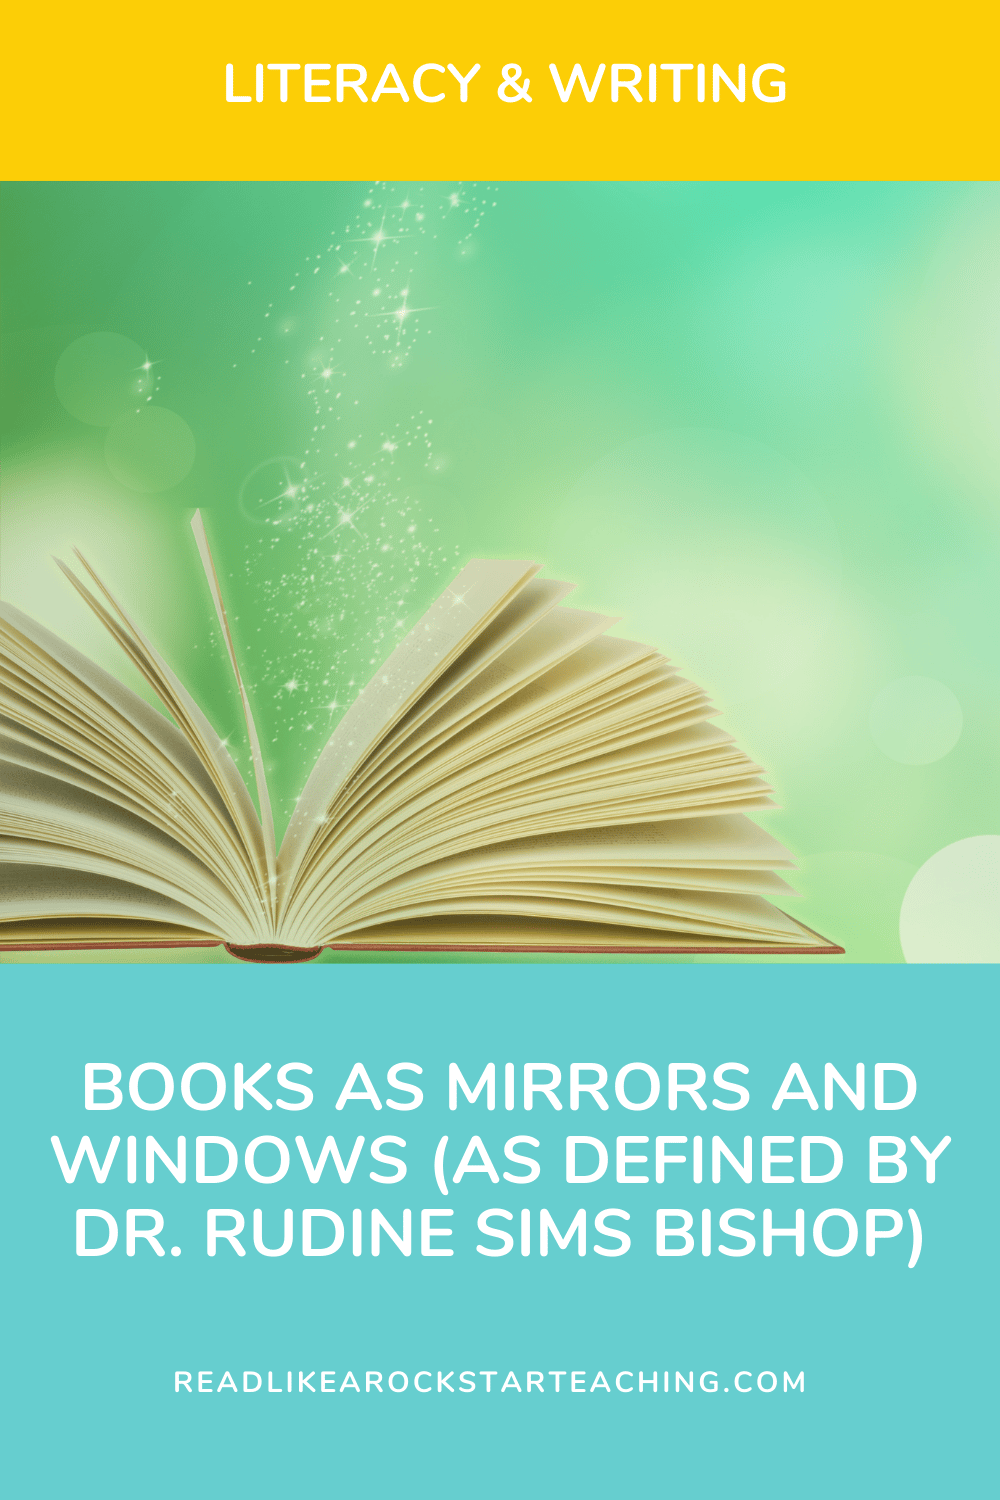 Windows Of Vision Book